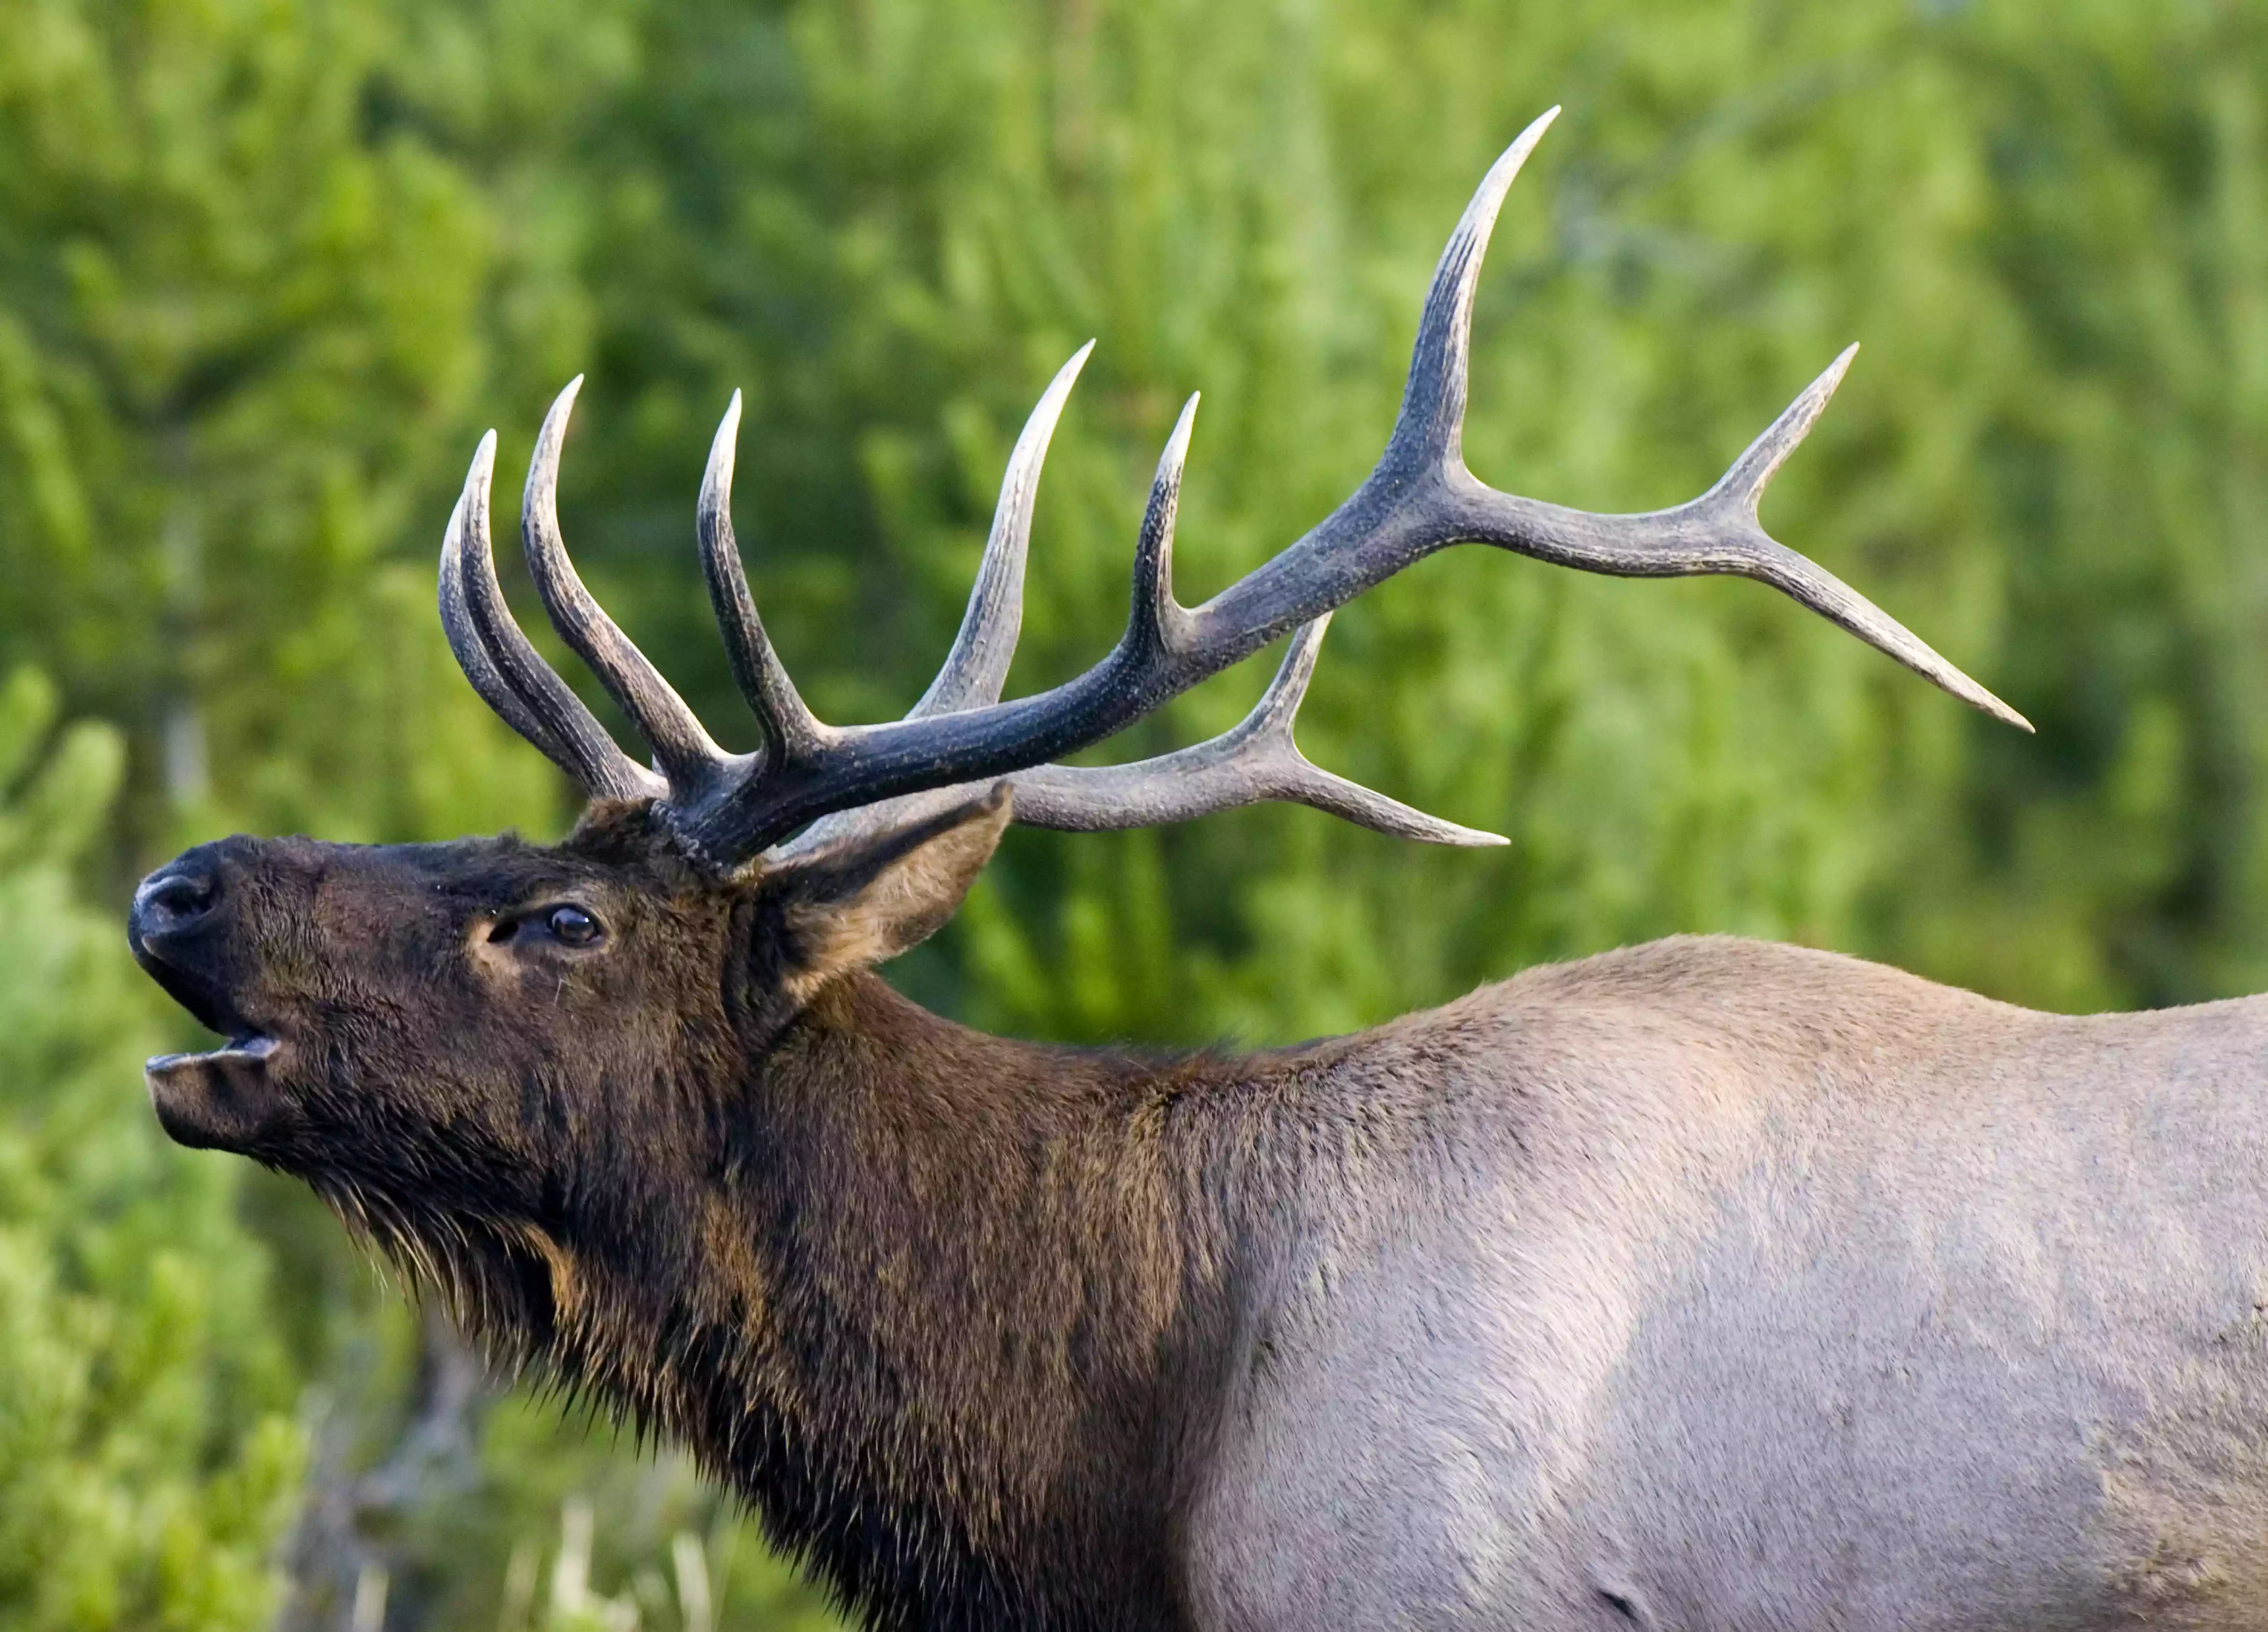 Bull elk bugling during rut season in Yellowstone National Park